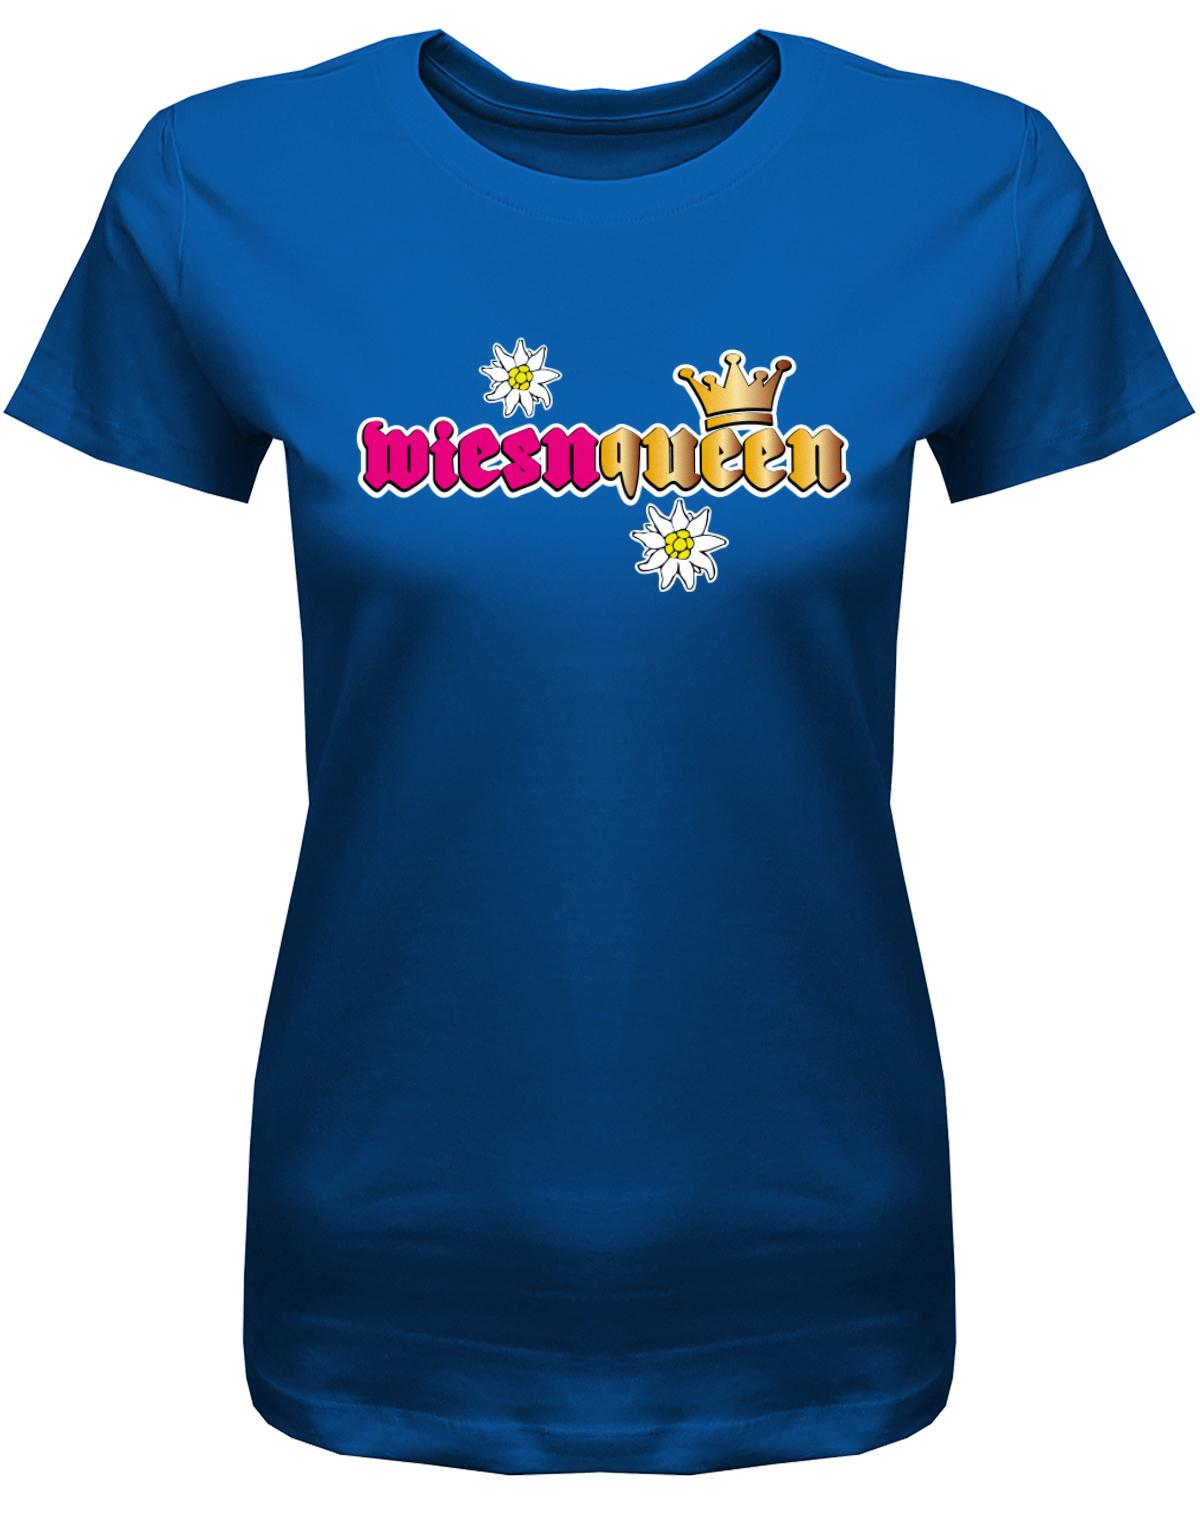 wiesnqueen-damen-shirt-royalblau